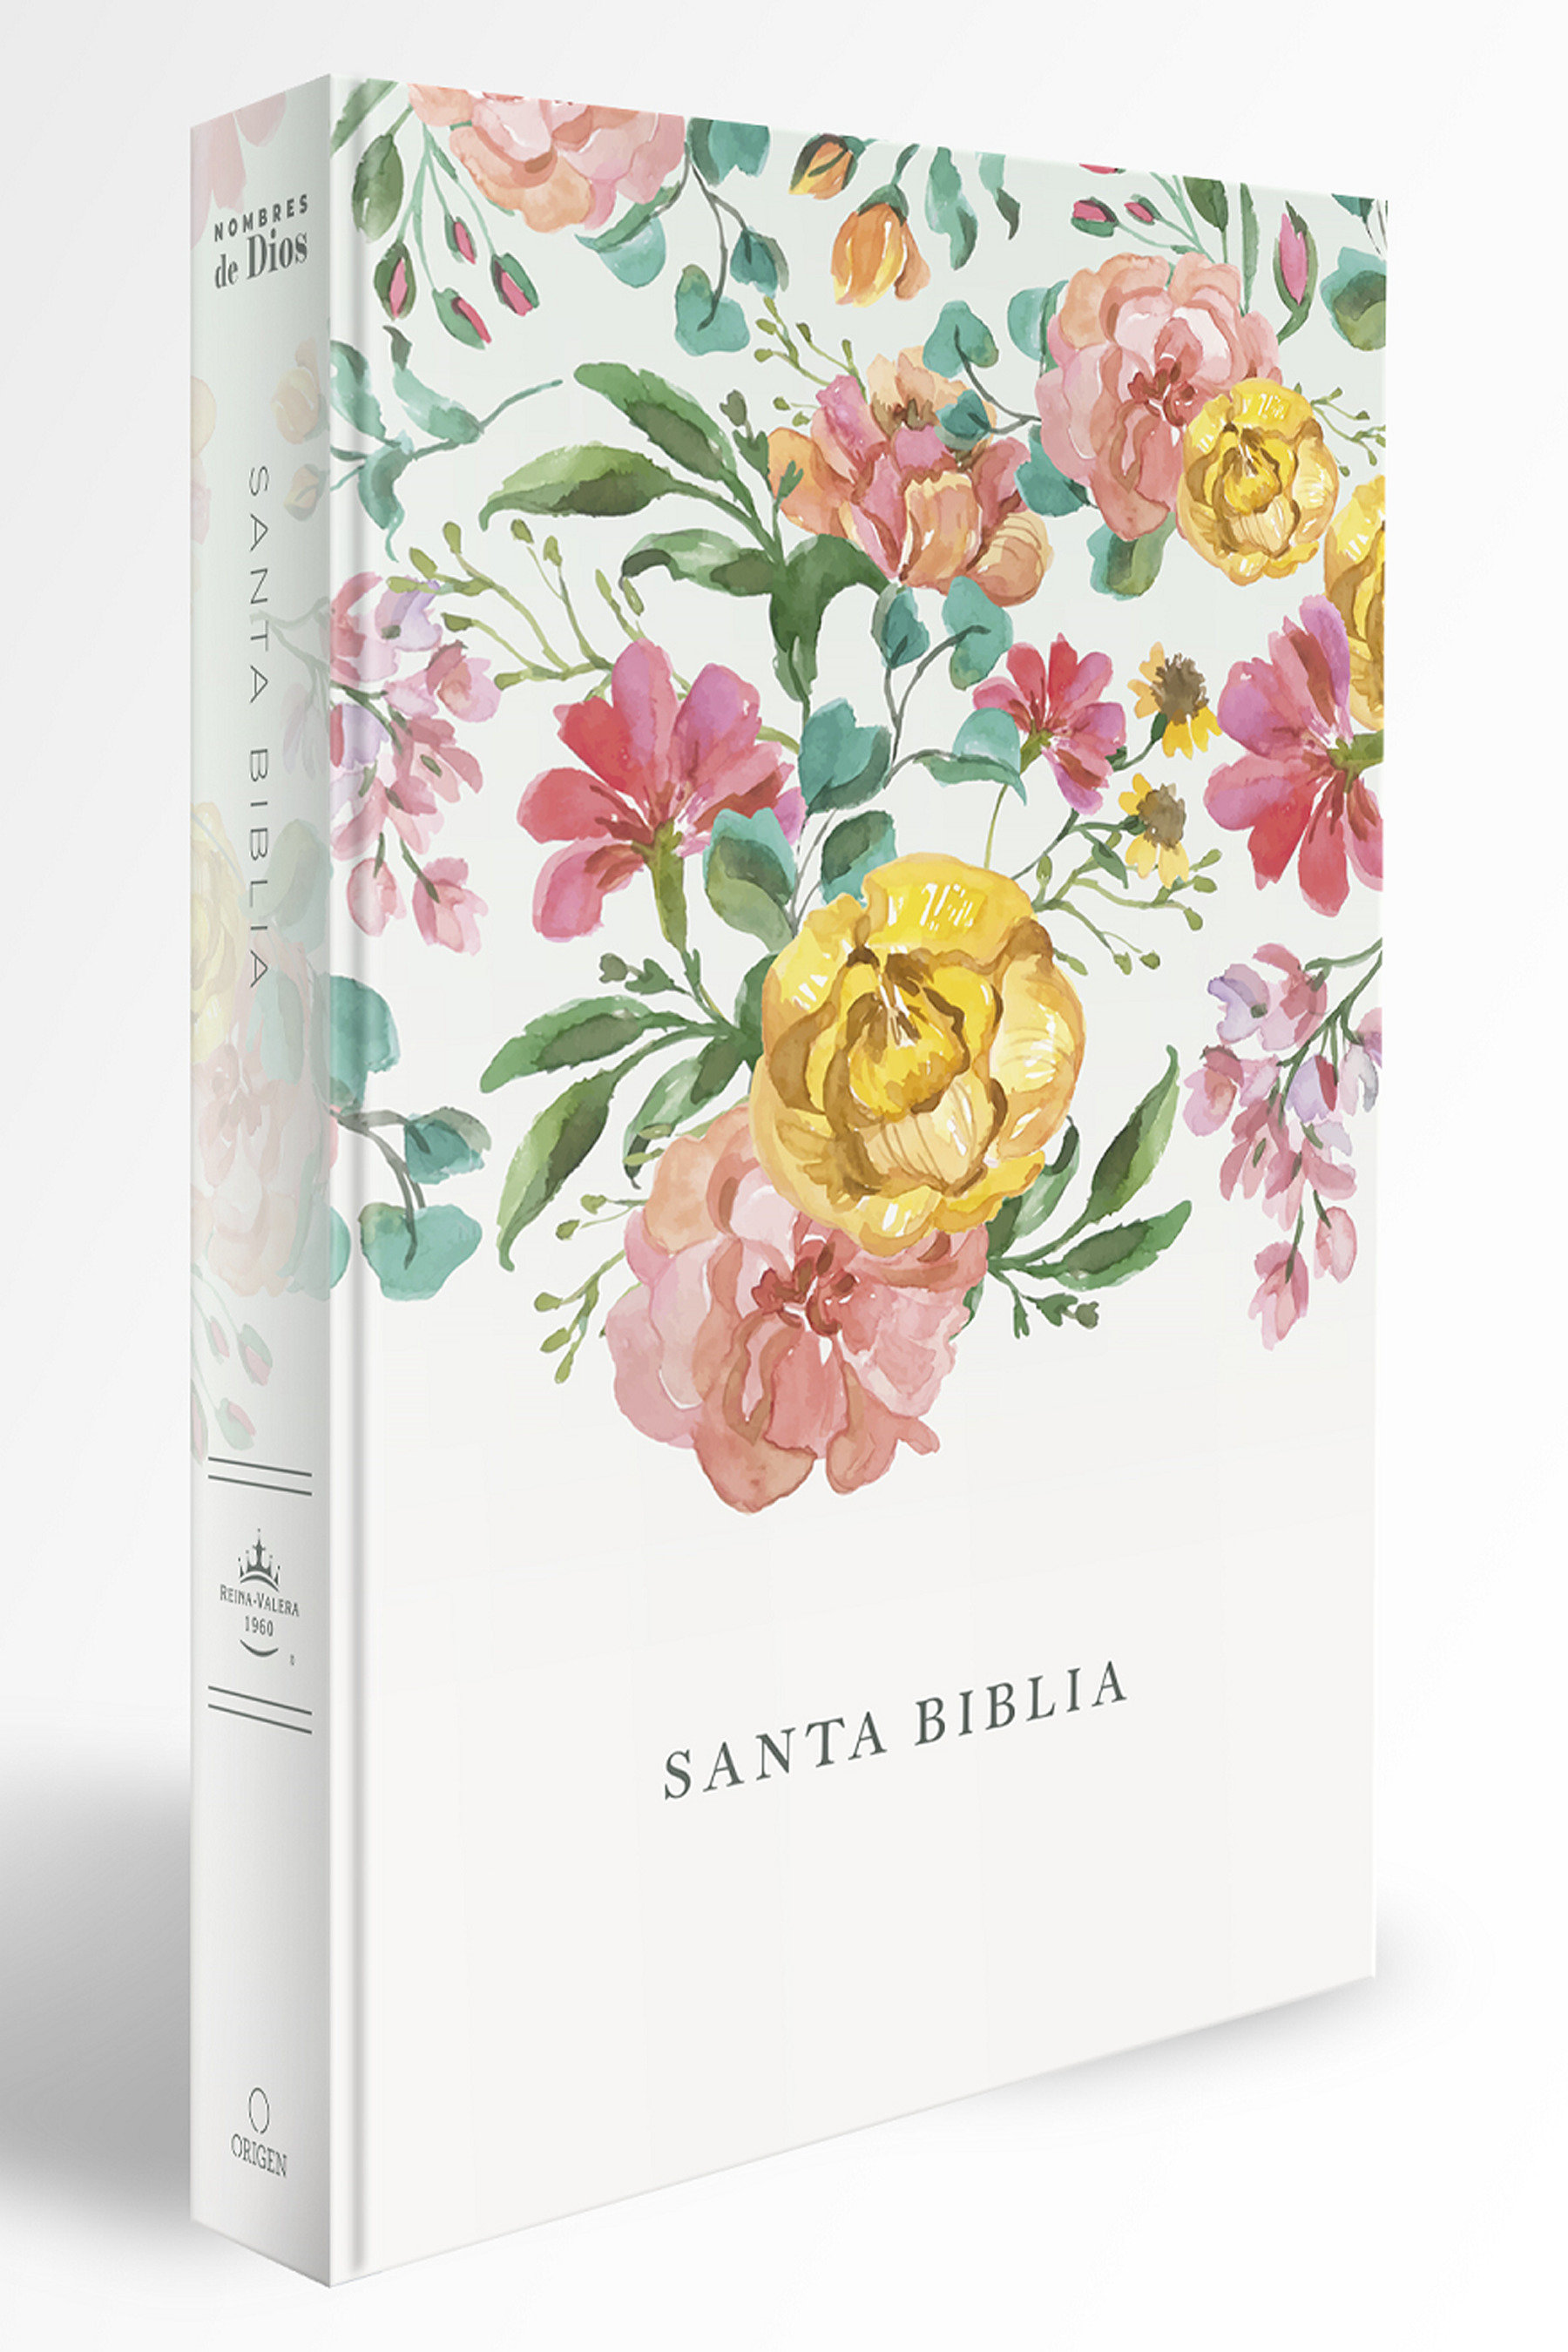 Biblia Reina Valera 1960 Tamaño Manual, Tapa Dura, Flores Rosadas / Spanish Bibl E Rvr 1960 Handy Size, Lp, Hc, Pink Flowers (Hardcover Book)